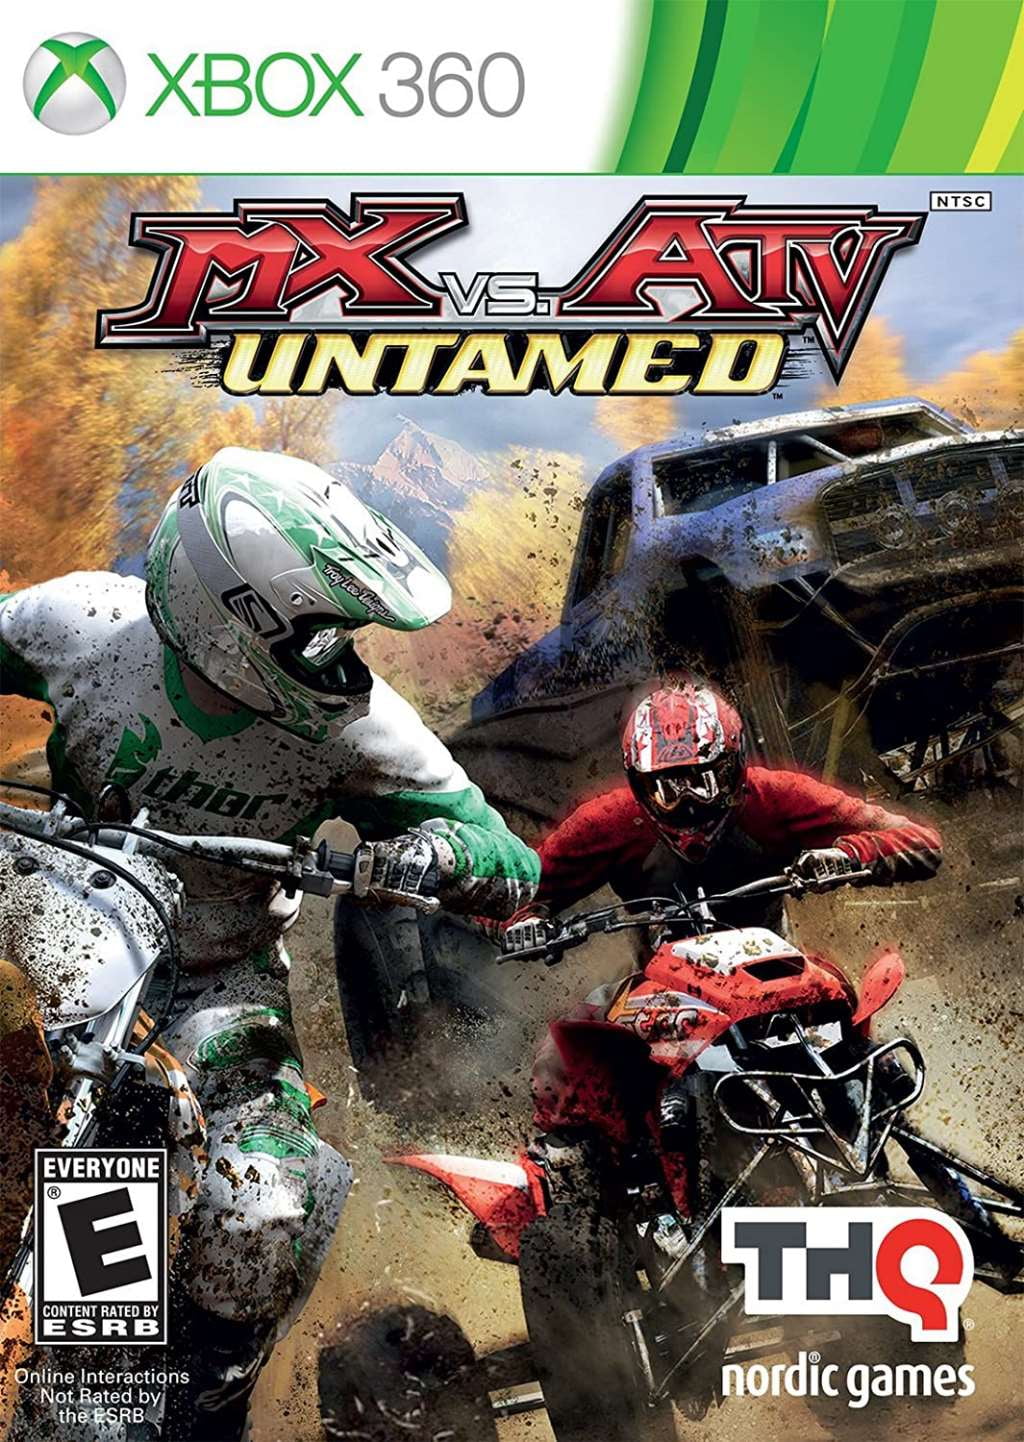 THQ MX vs ATV Untamed, Nordic Games, Xbox 360, Physical, 854436004572